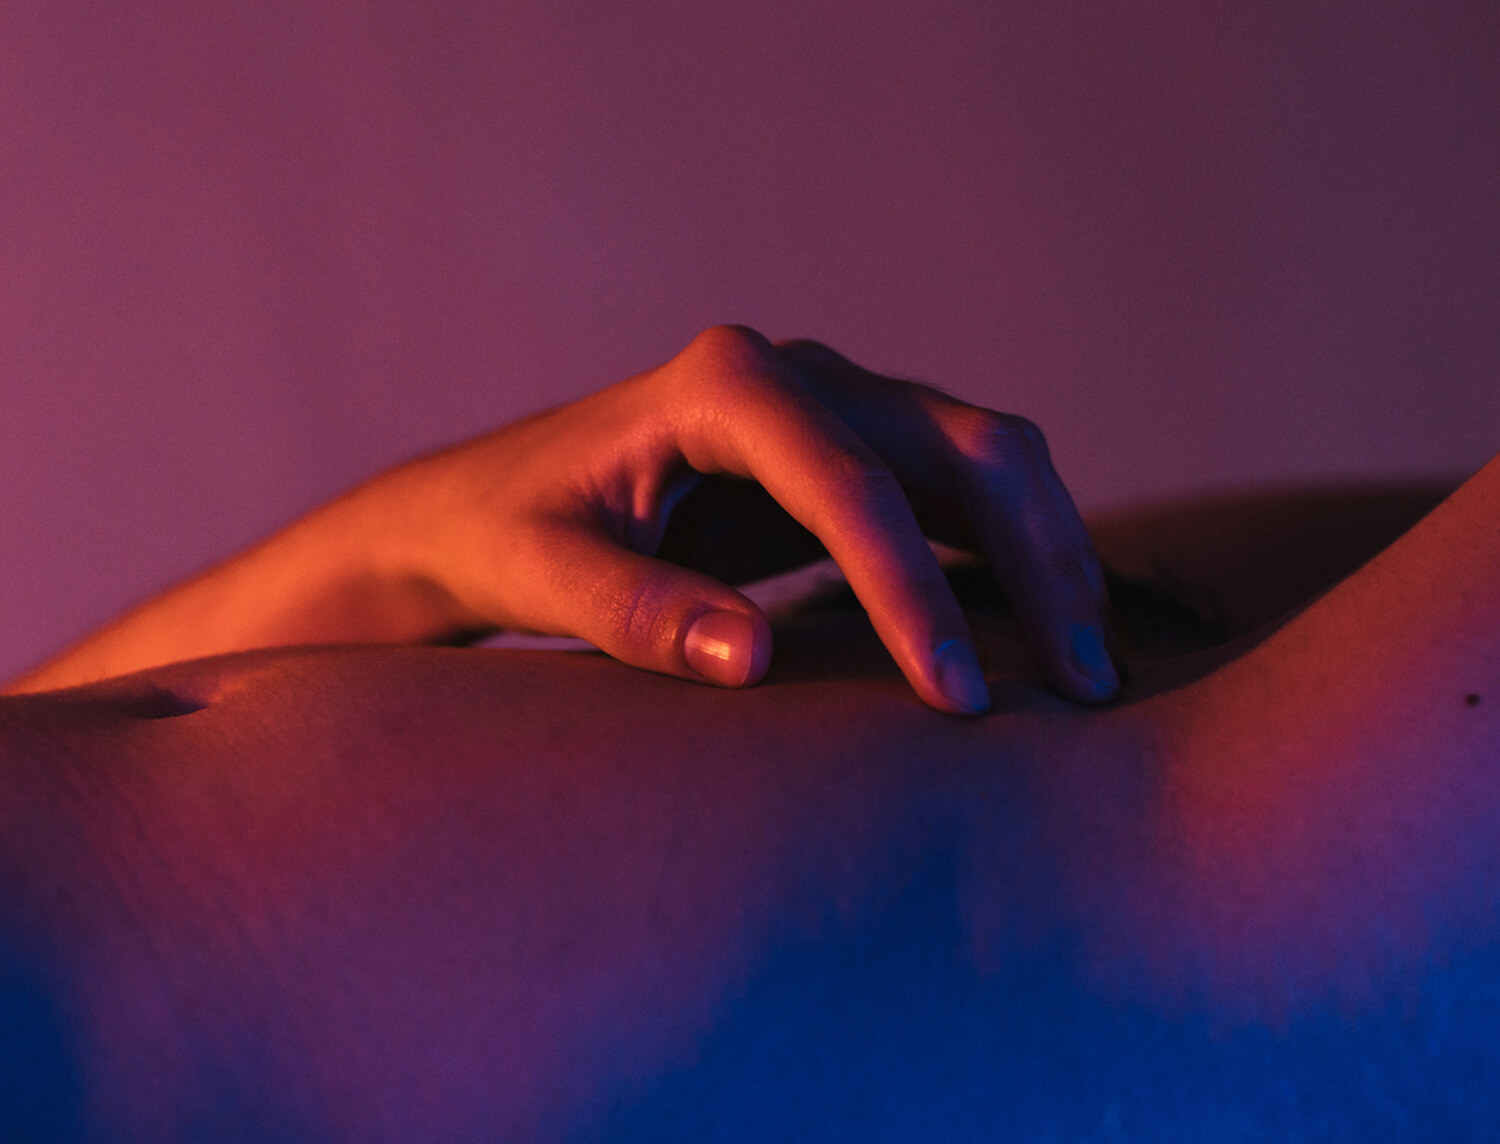 woman's manus  touching her abdomen